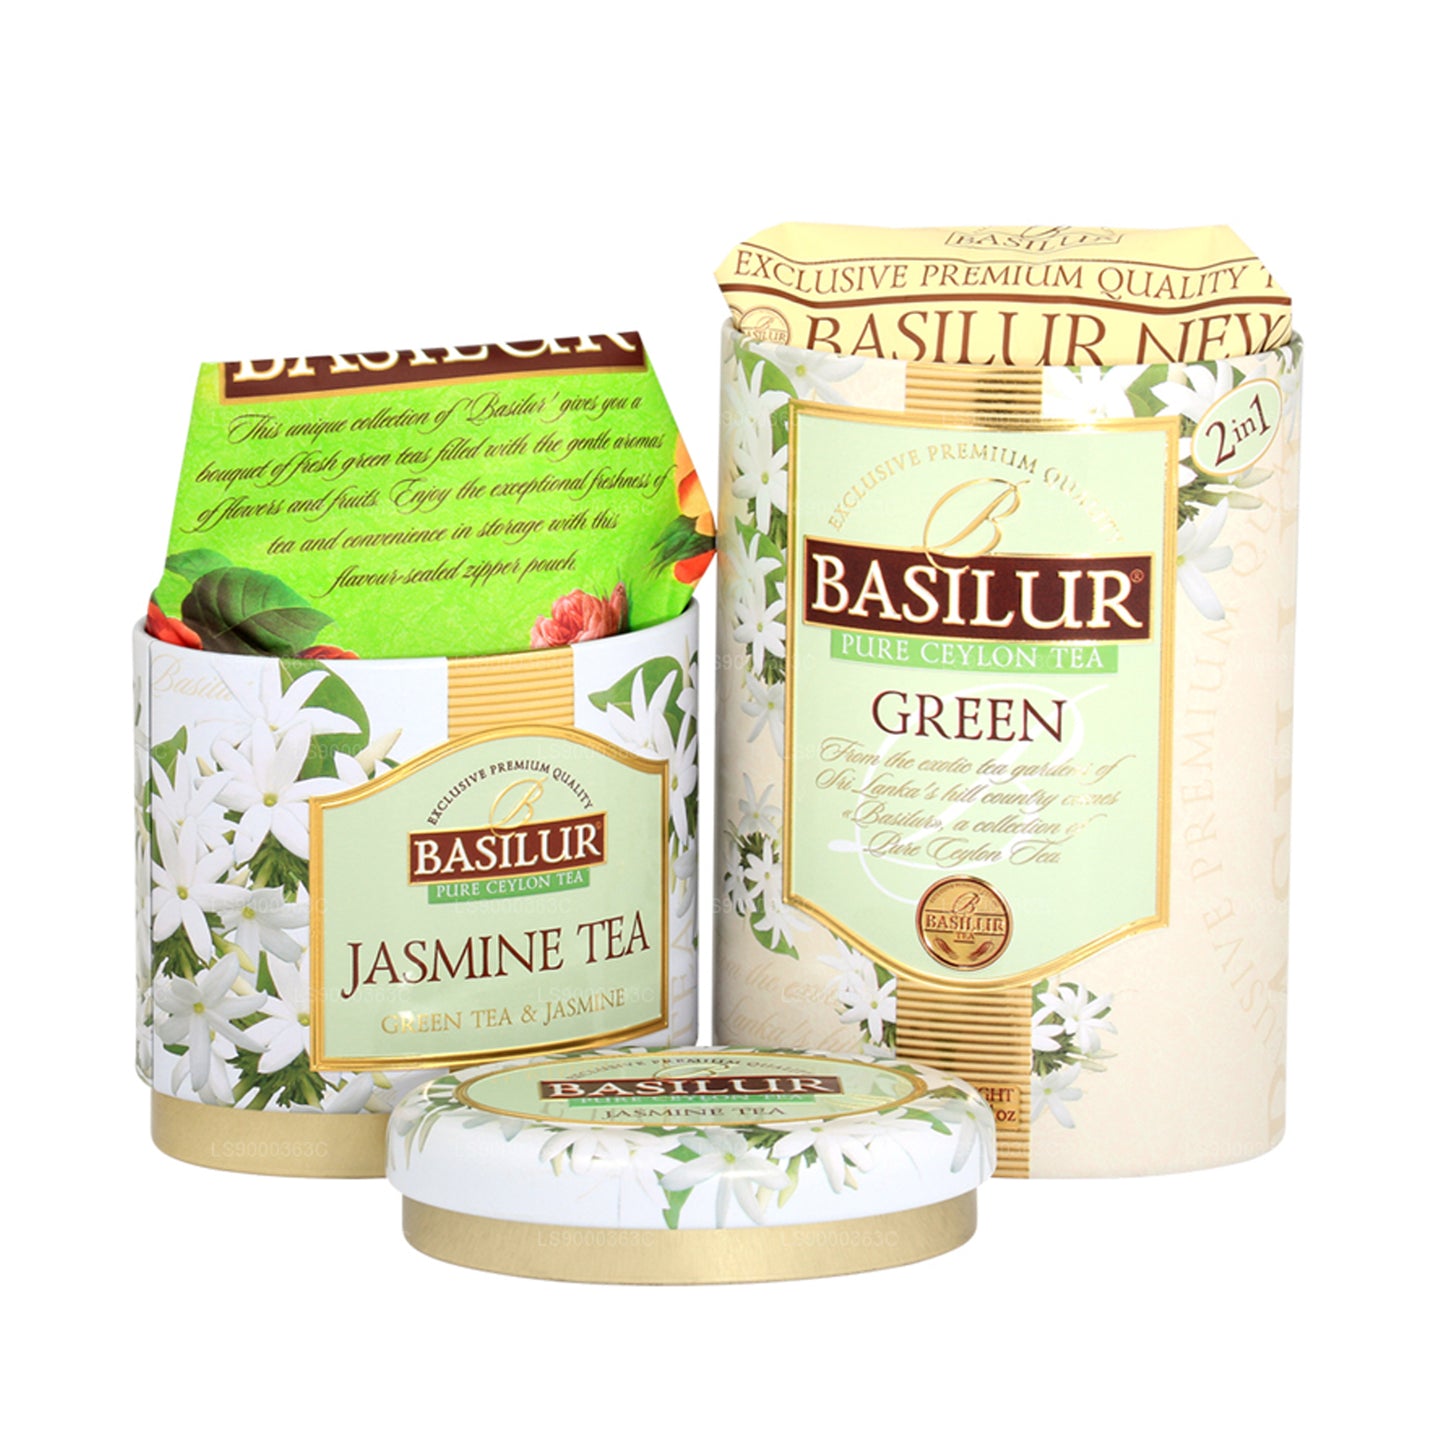 Basilur Fruits and Flowers "Green Tea with Jasmine" (125g) Caddy